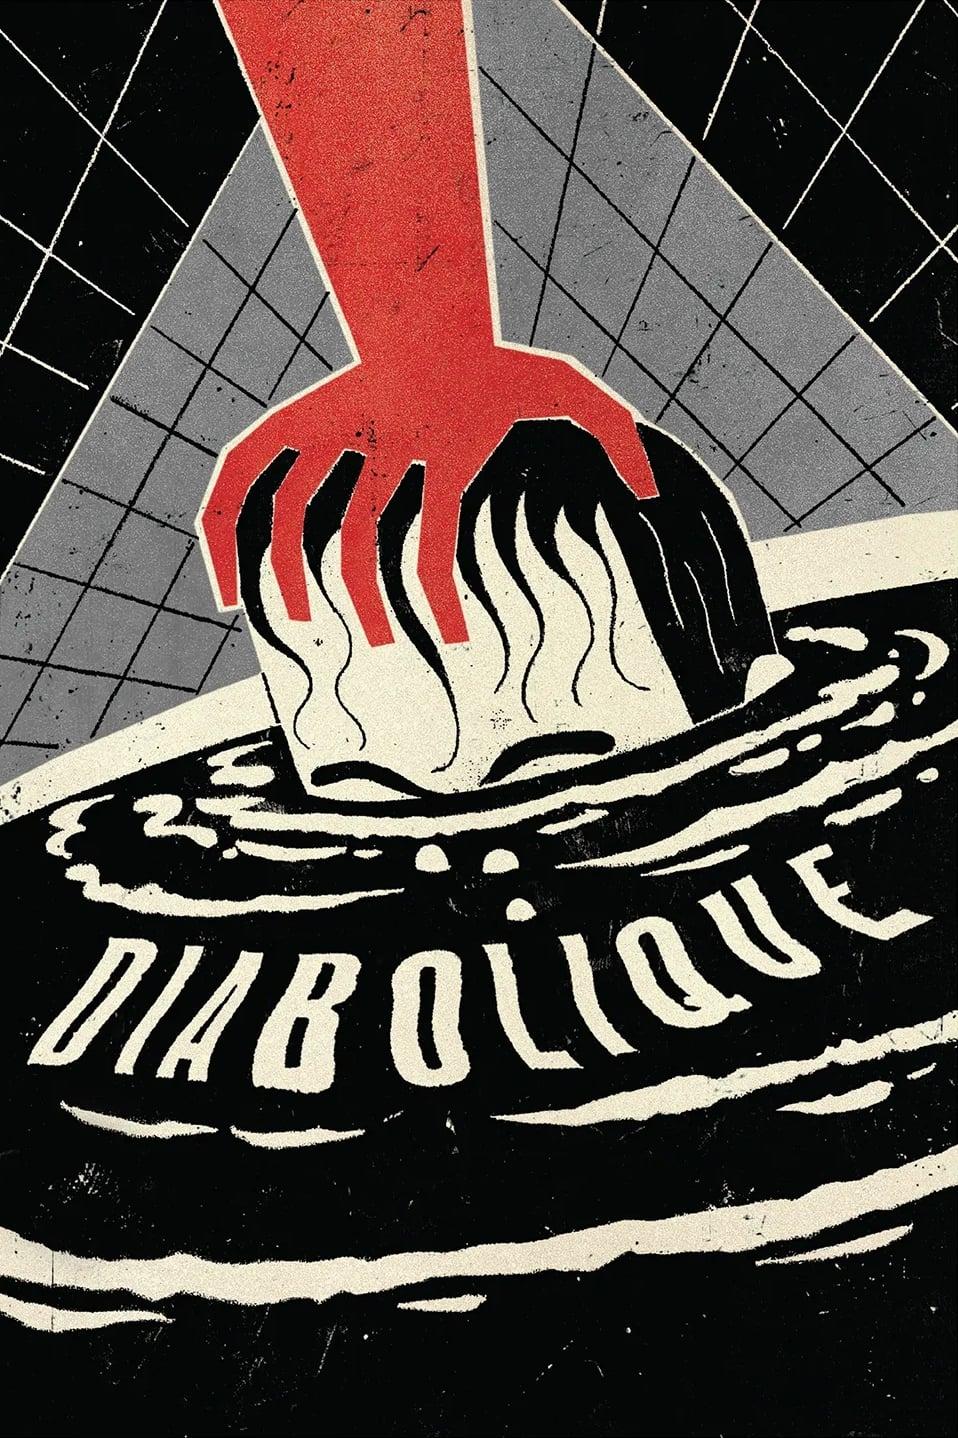 Diabolique poster